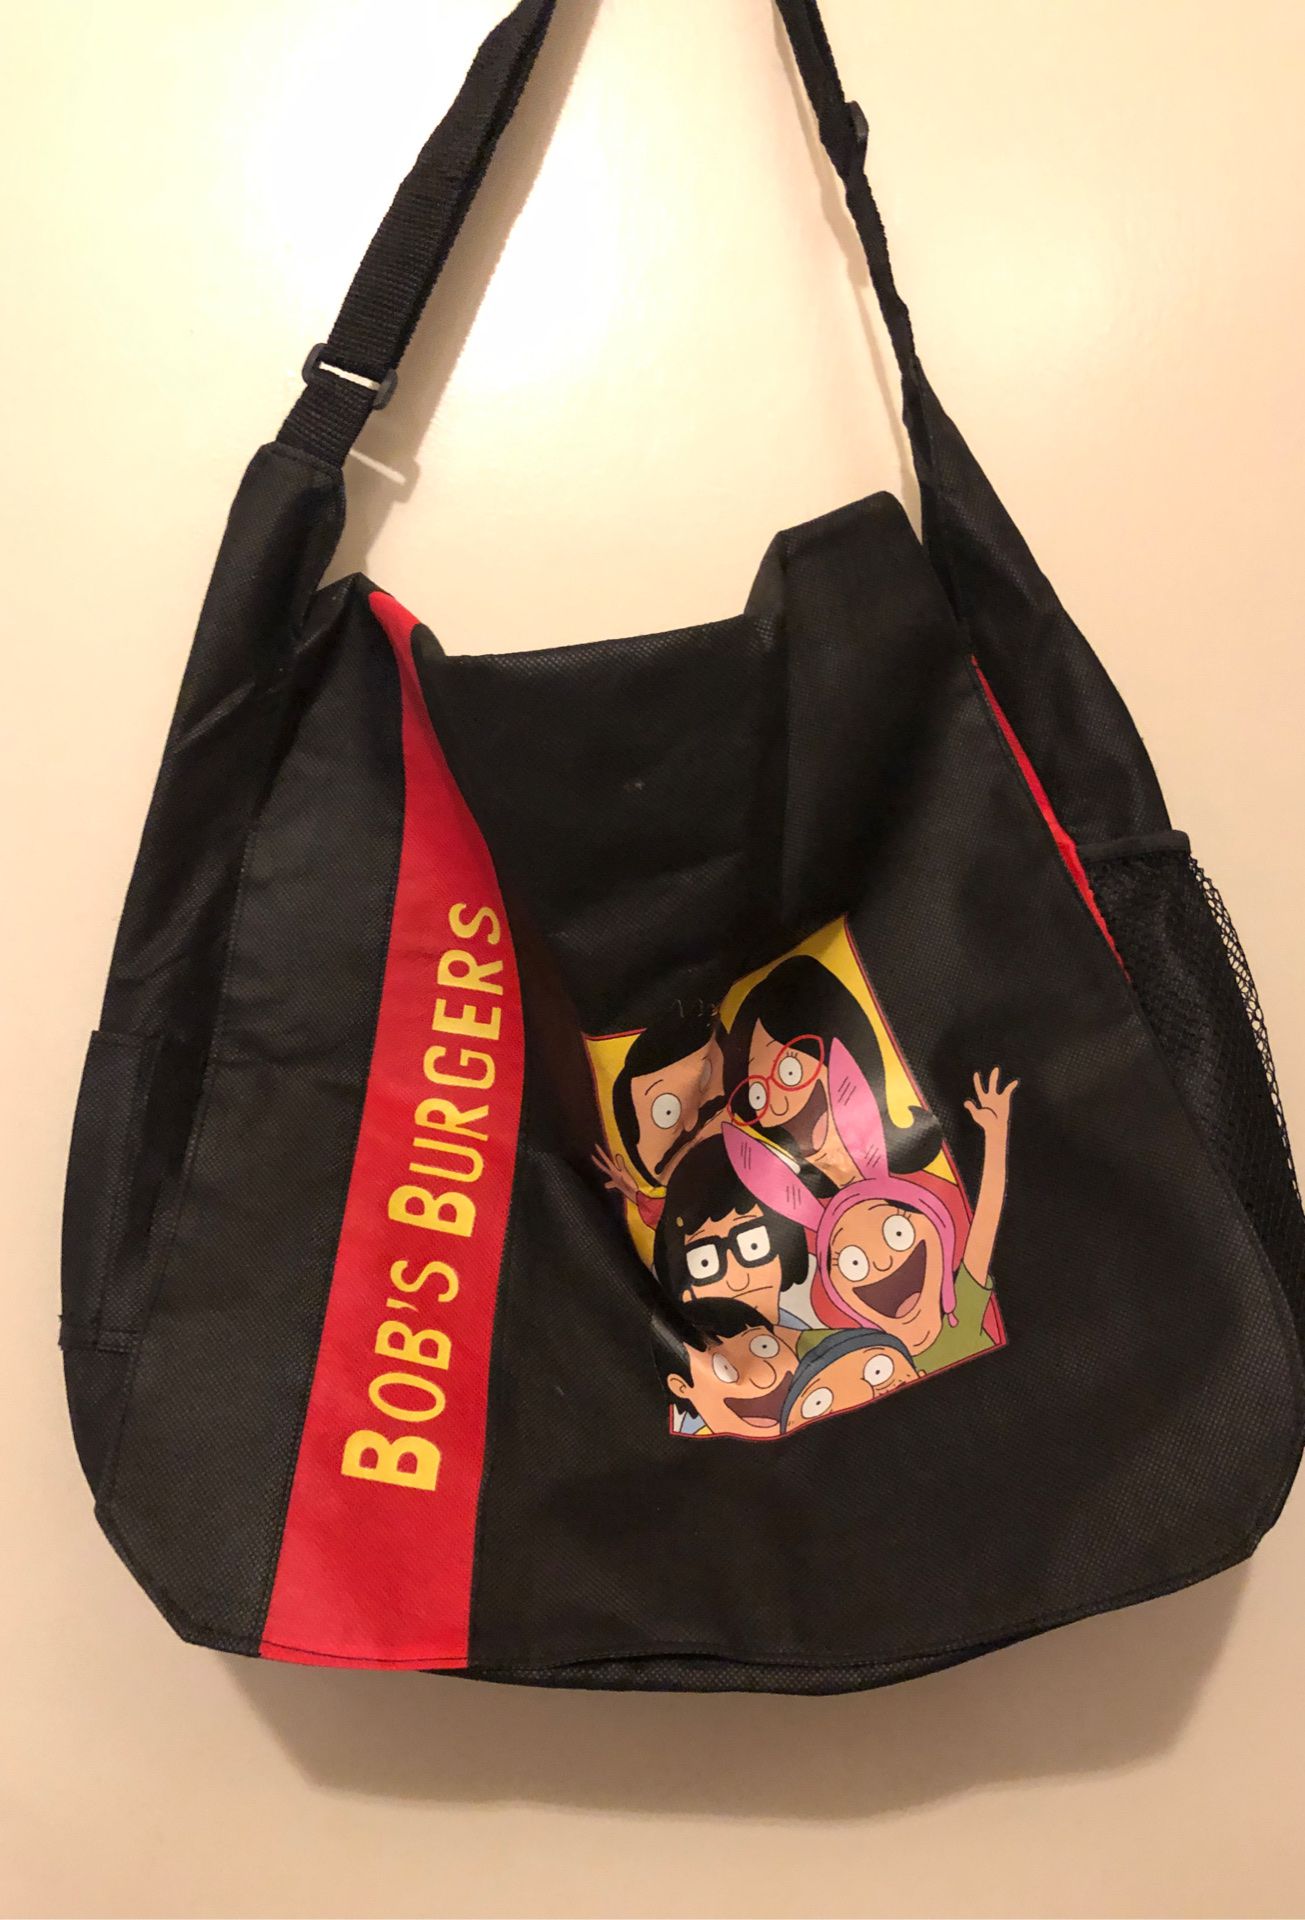 Bobs burger style Messenger bag